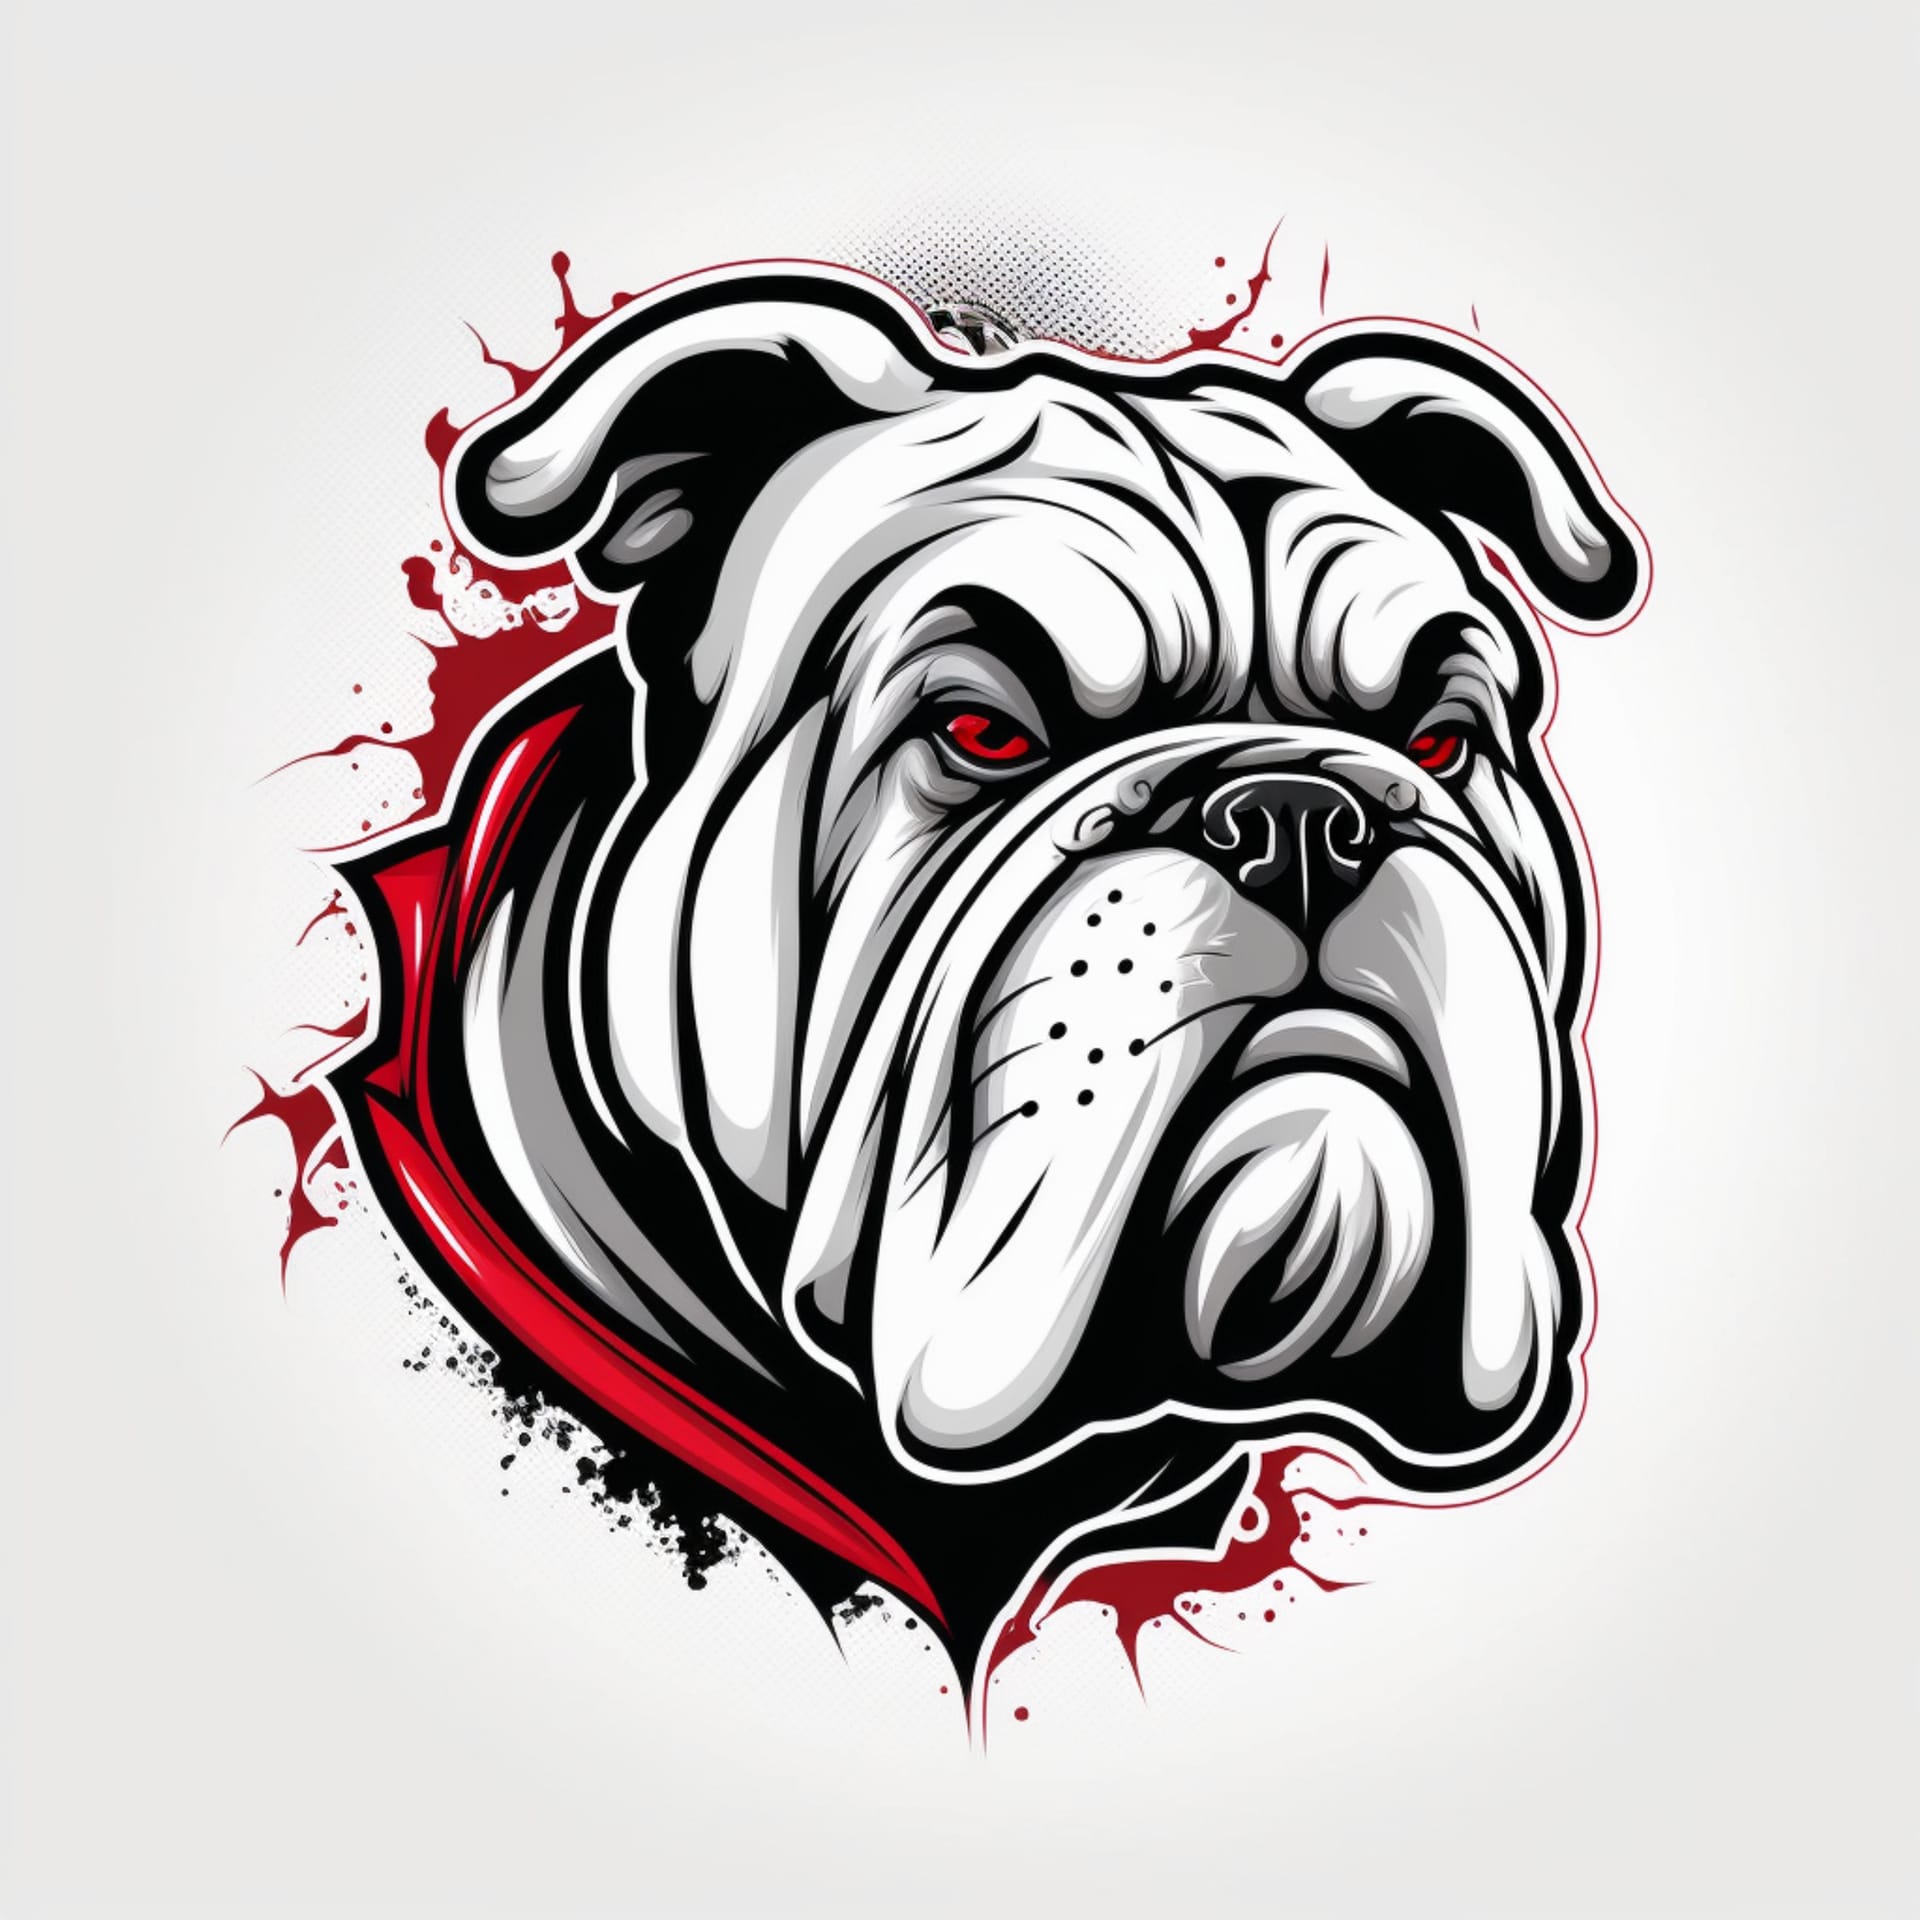 Bulldog logo illustration nice image